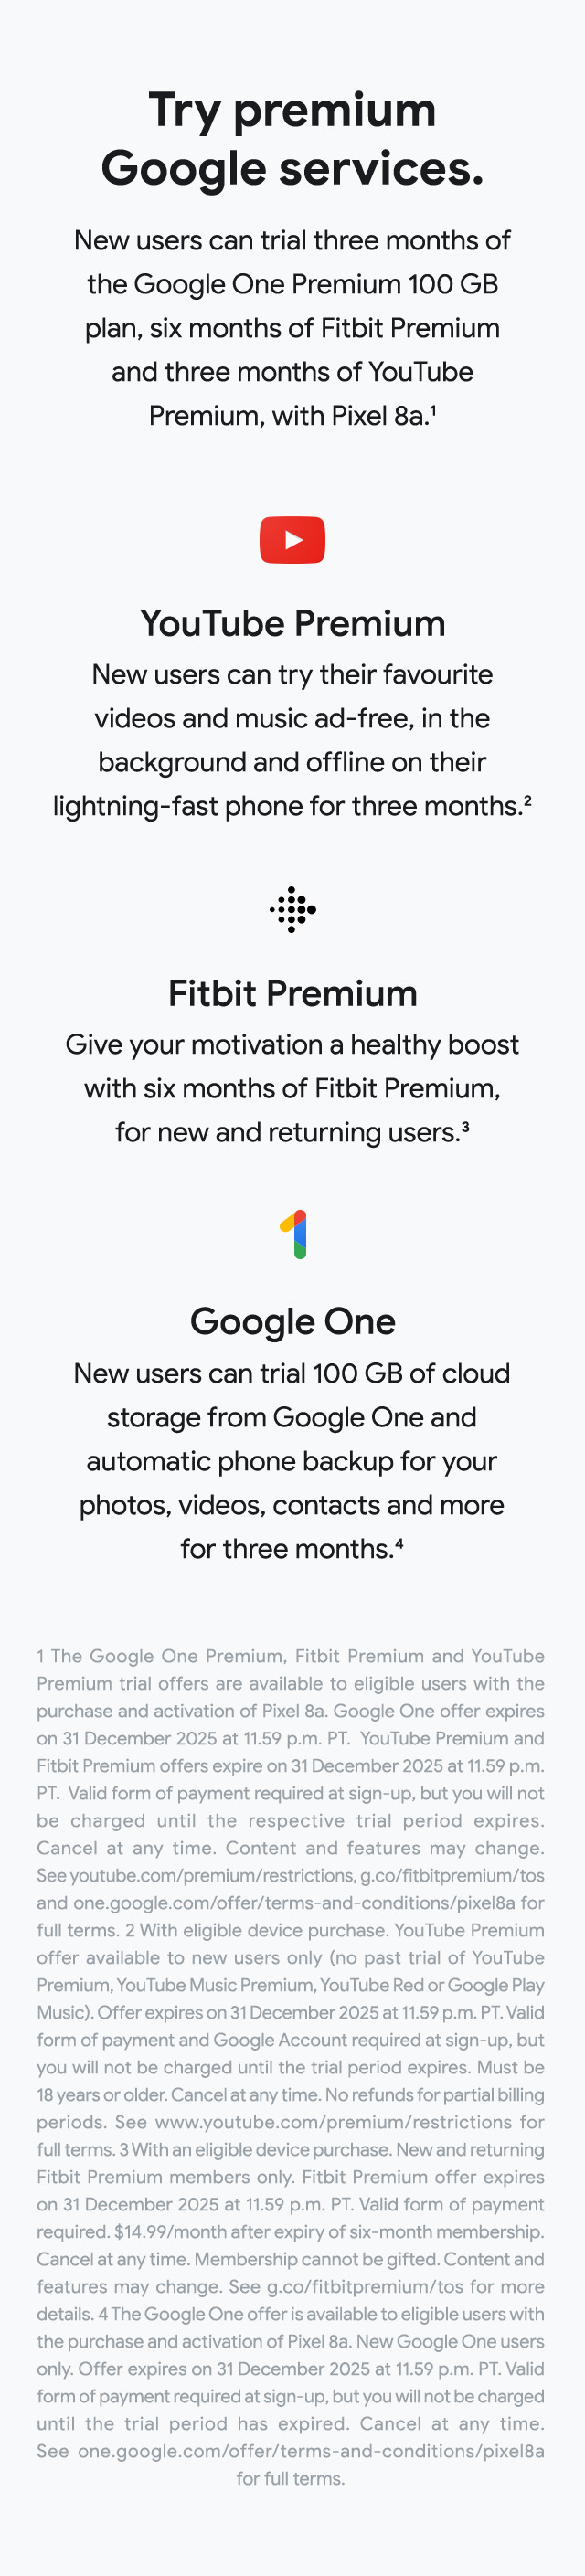 Try premium Google services.